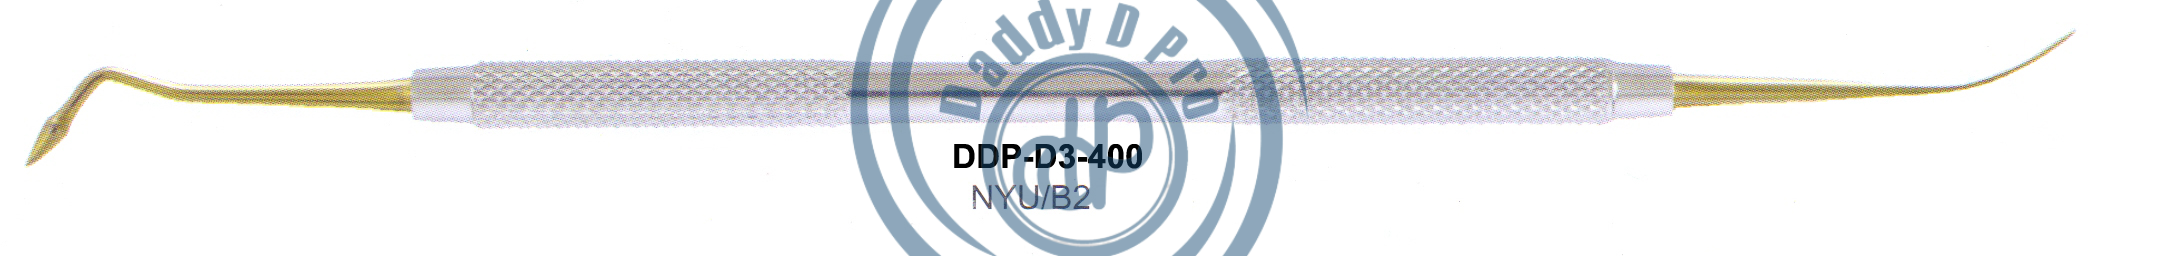 images/DDP-D3-400.png